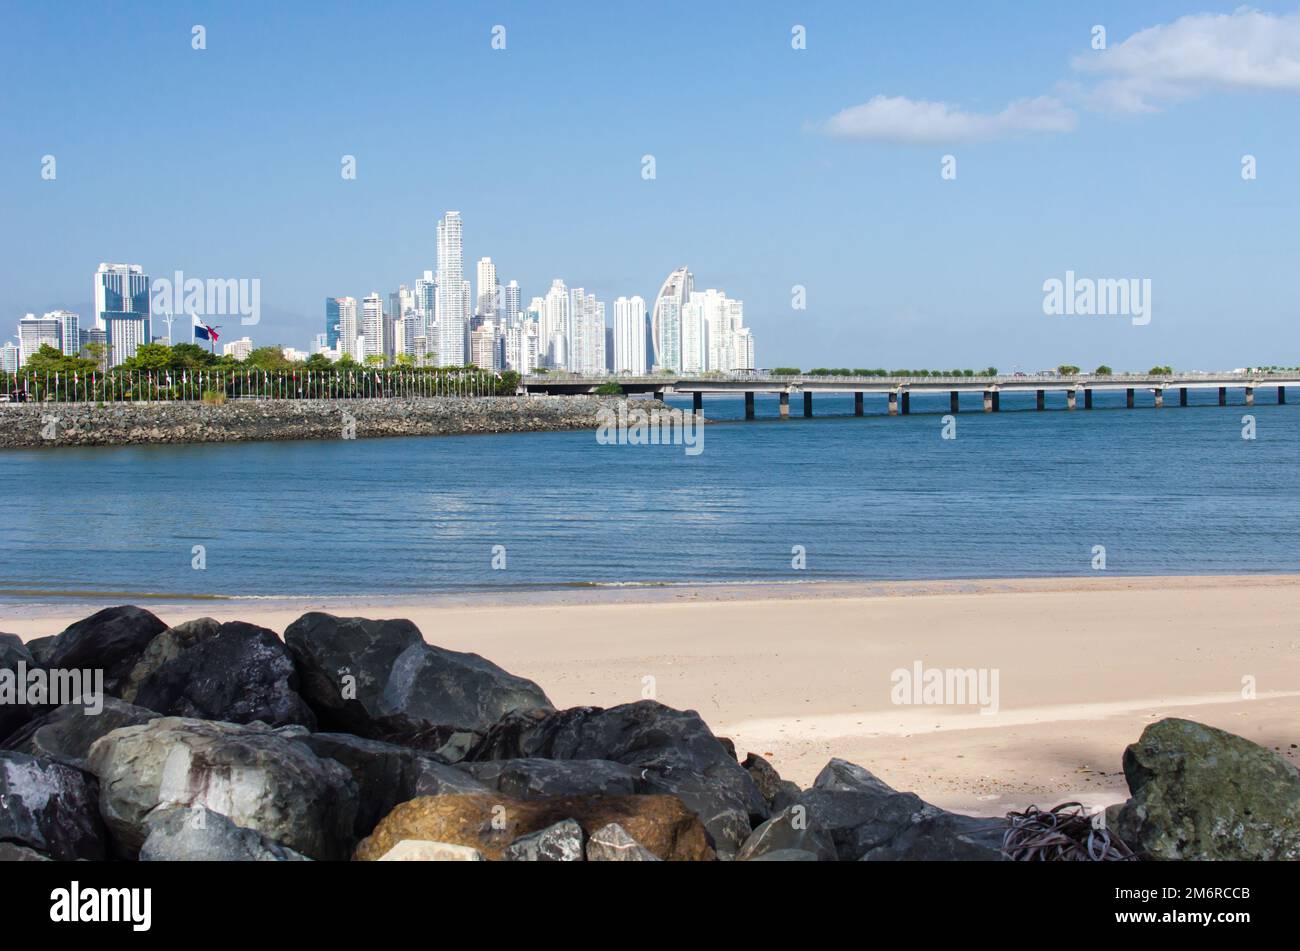 Panama City skyline as seen from Plaza V Centenario at the entrance to Old City in San Felipe Stock Photo